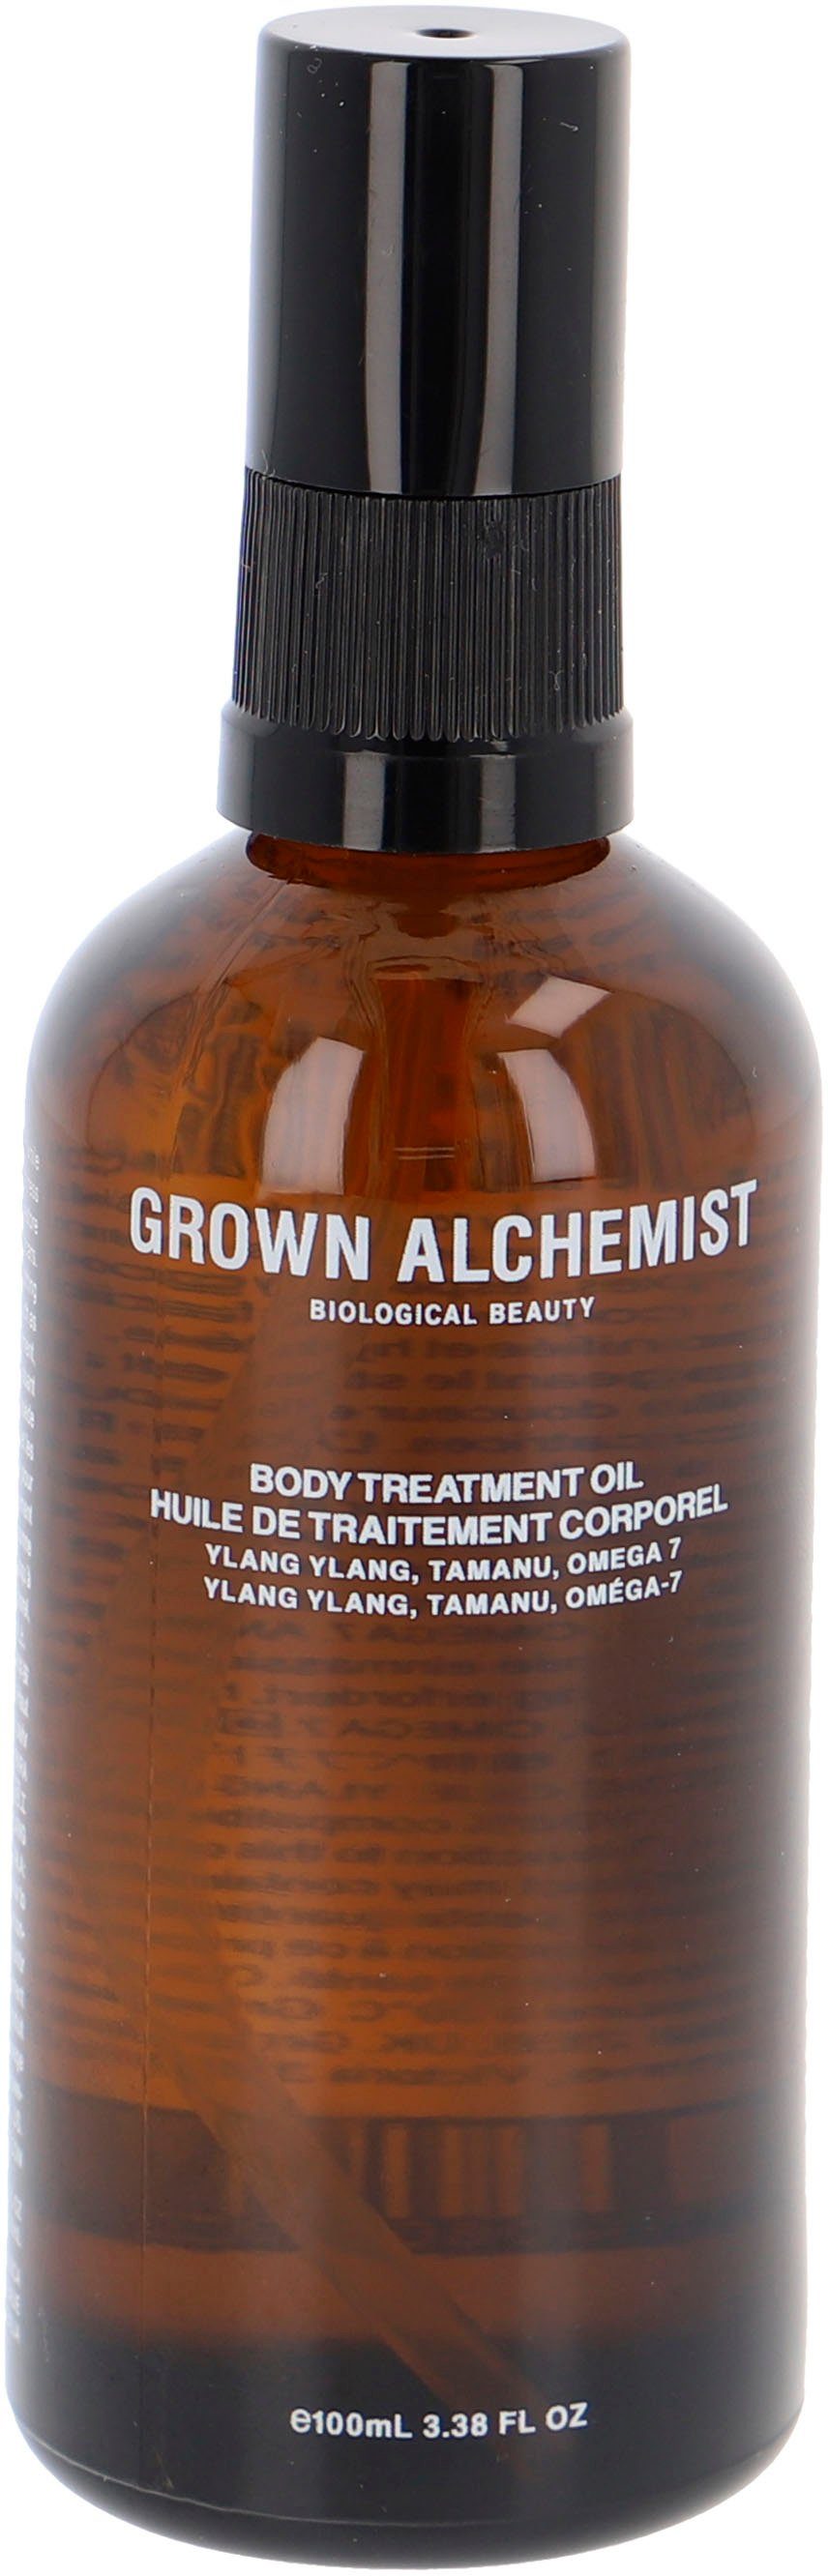 GROWN ALCHEMIST Körperöl Body Treatment Ylang, Oil: Tamanu, Omega Ylang 7